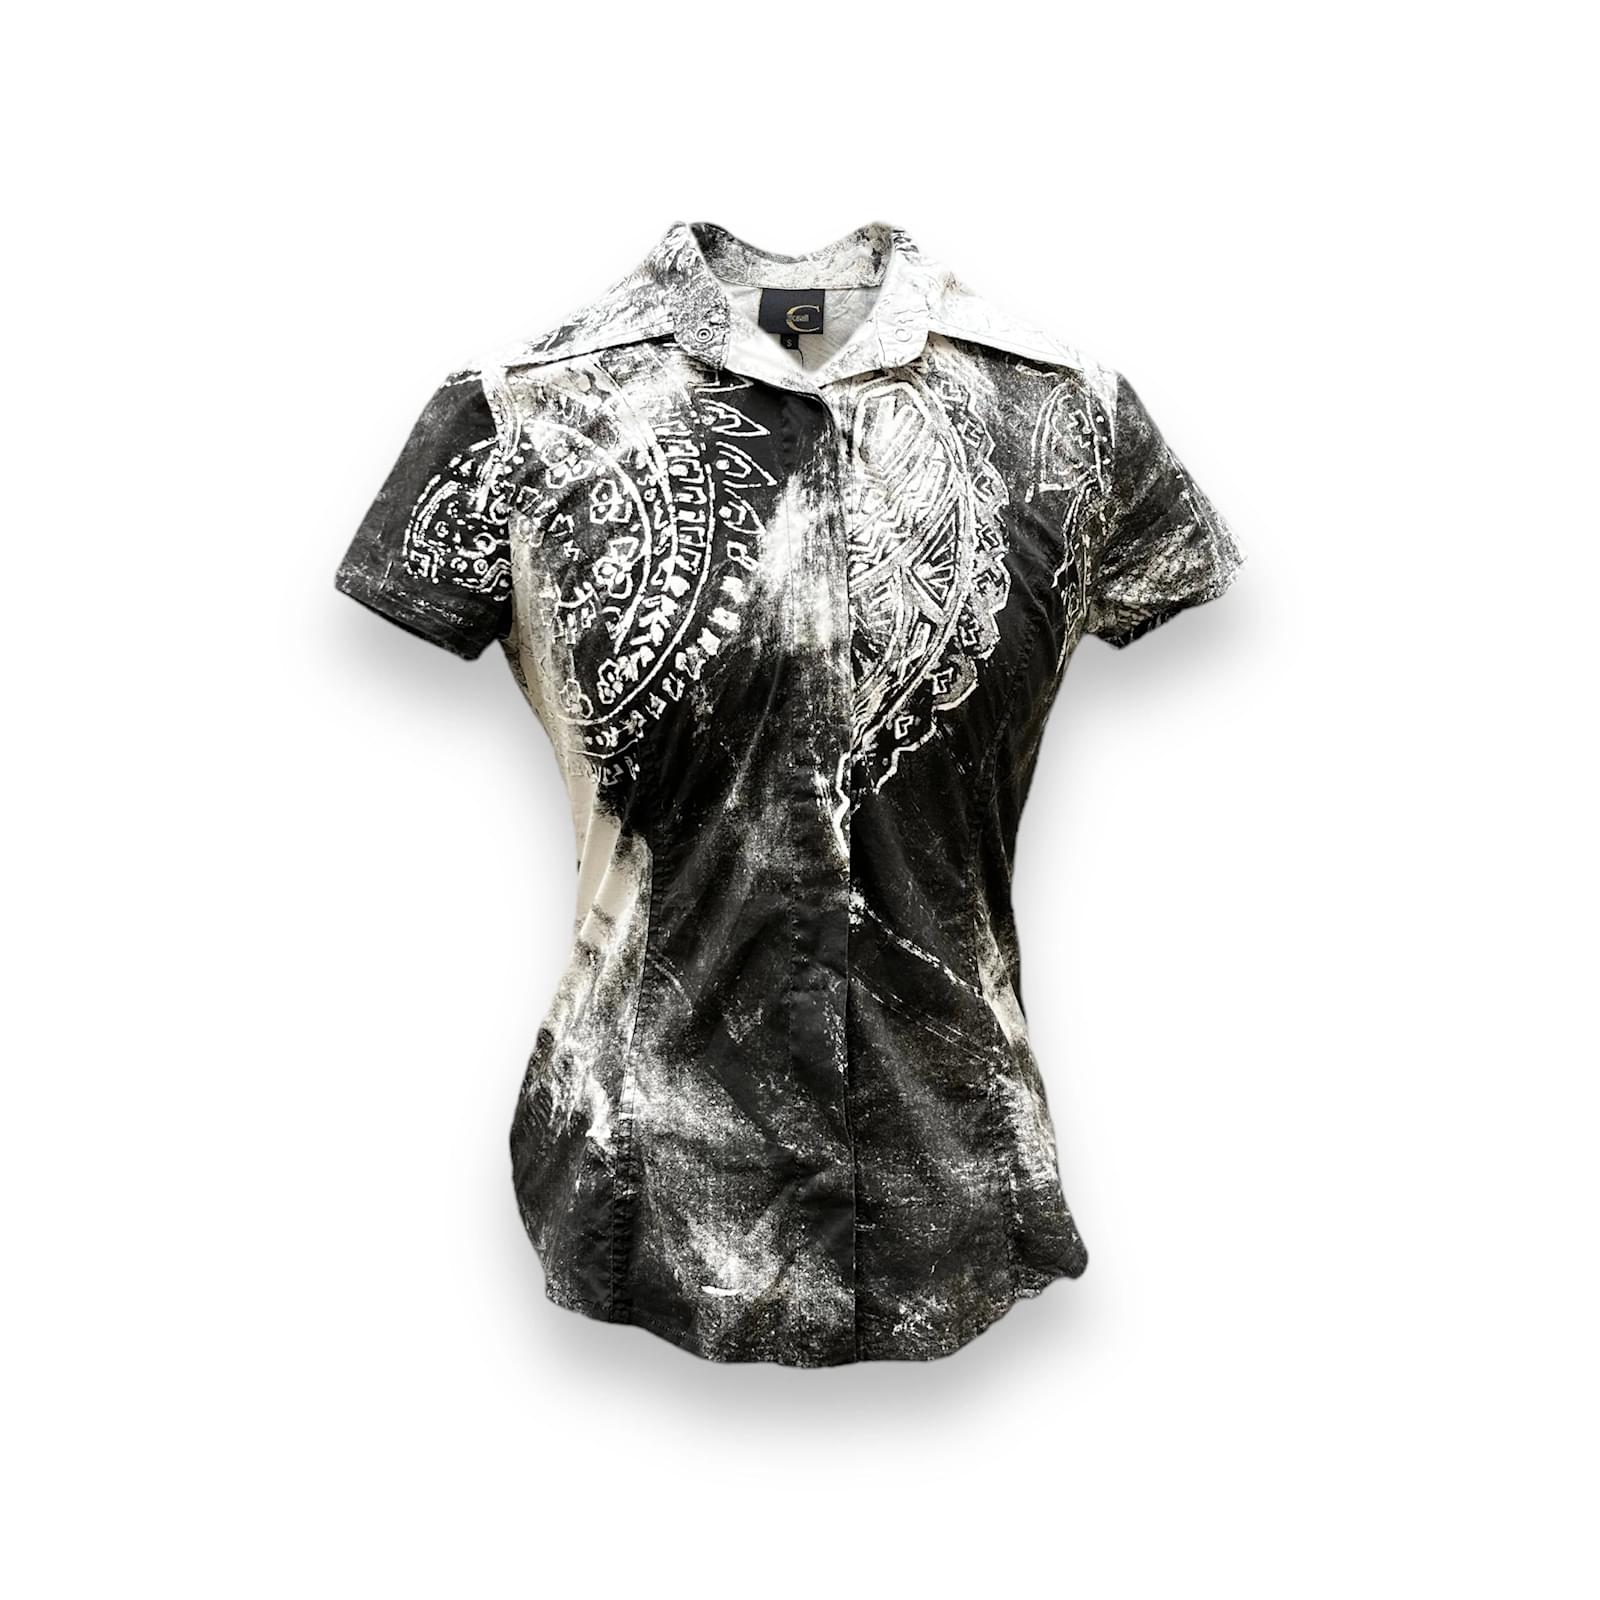 Luxury shirt for men - Roberto Cavalli black silk shirt with animal print